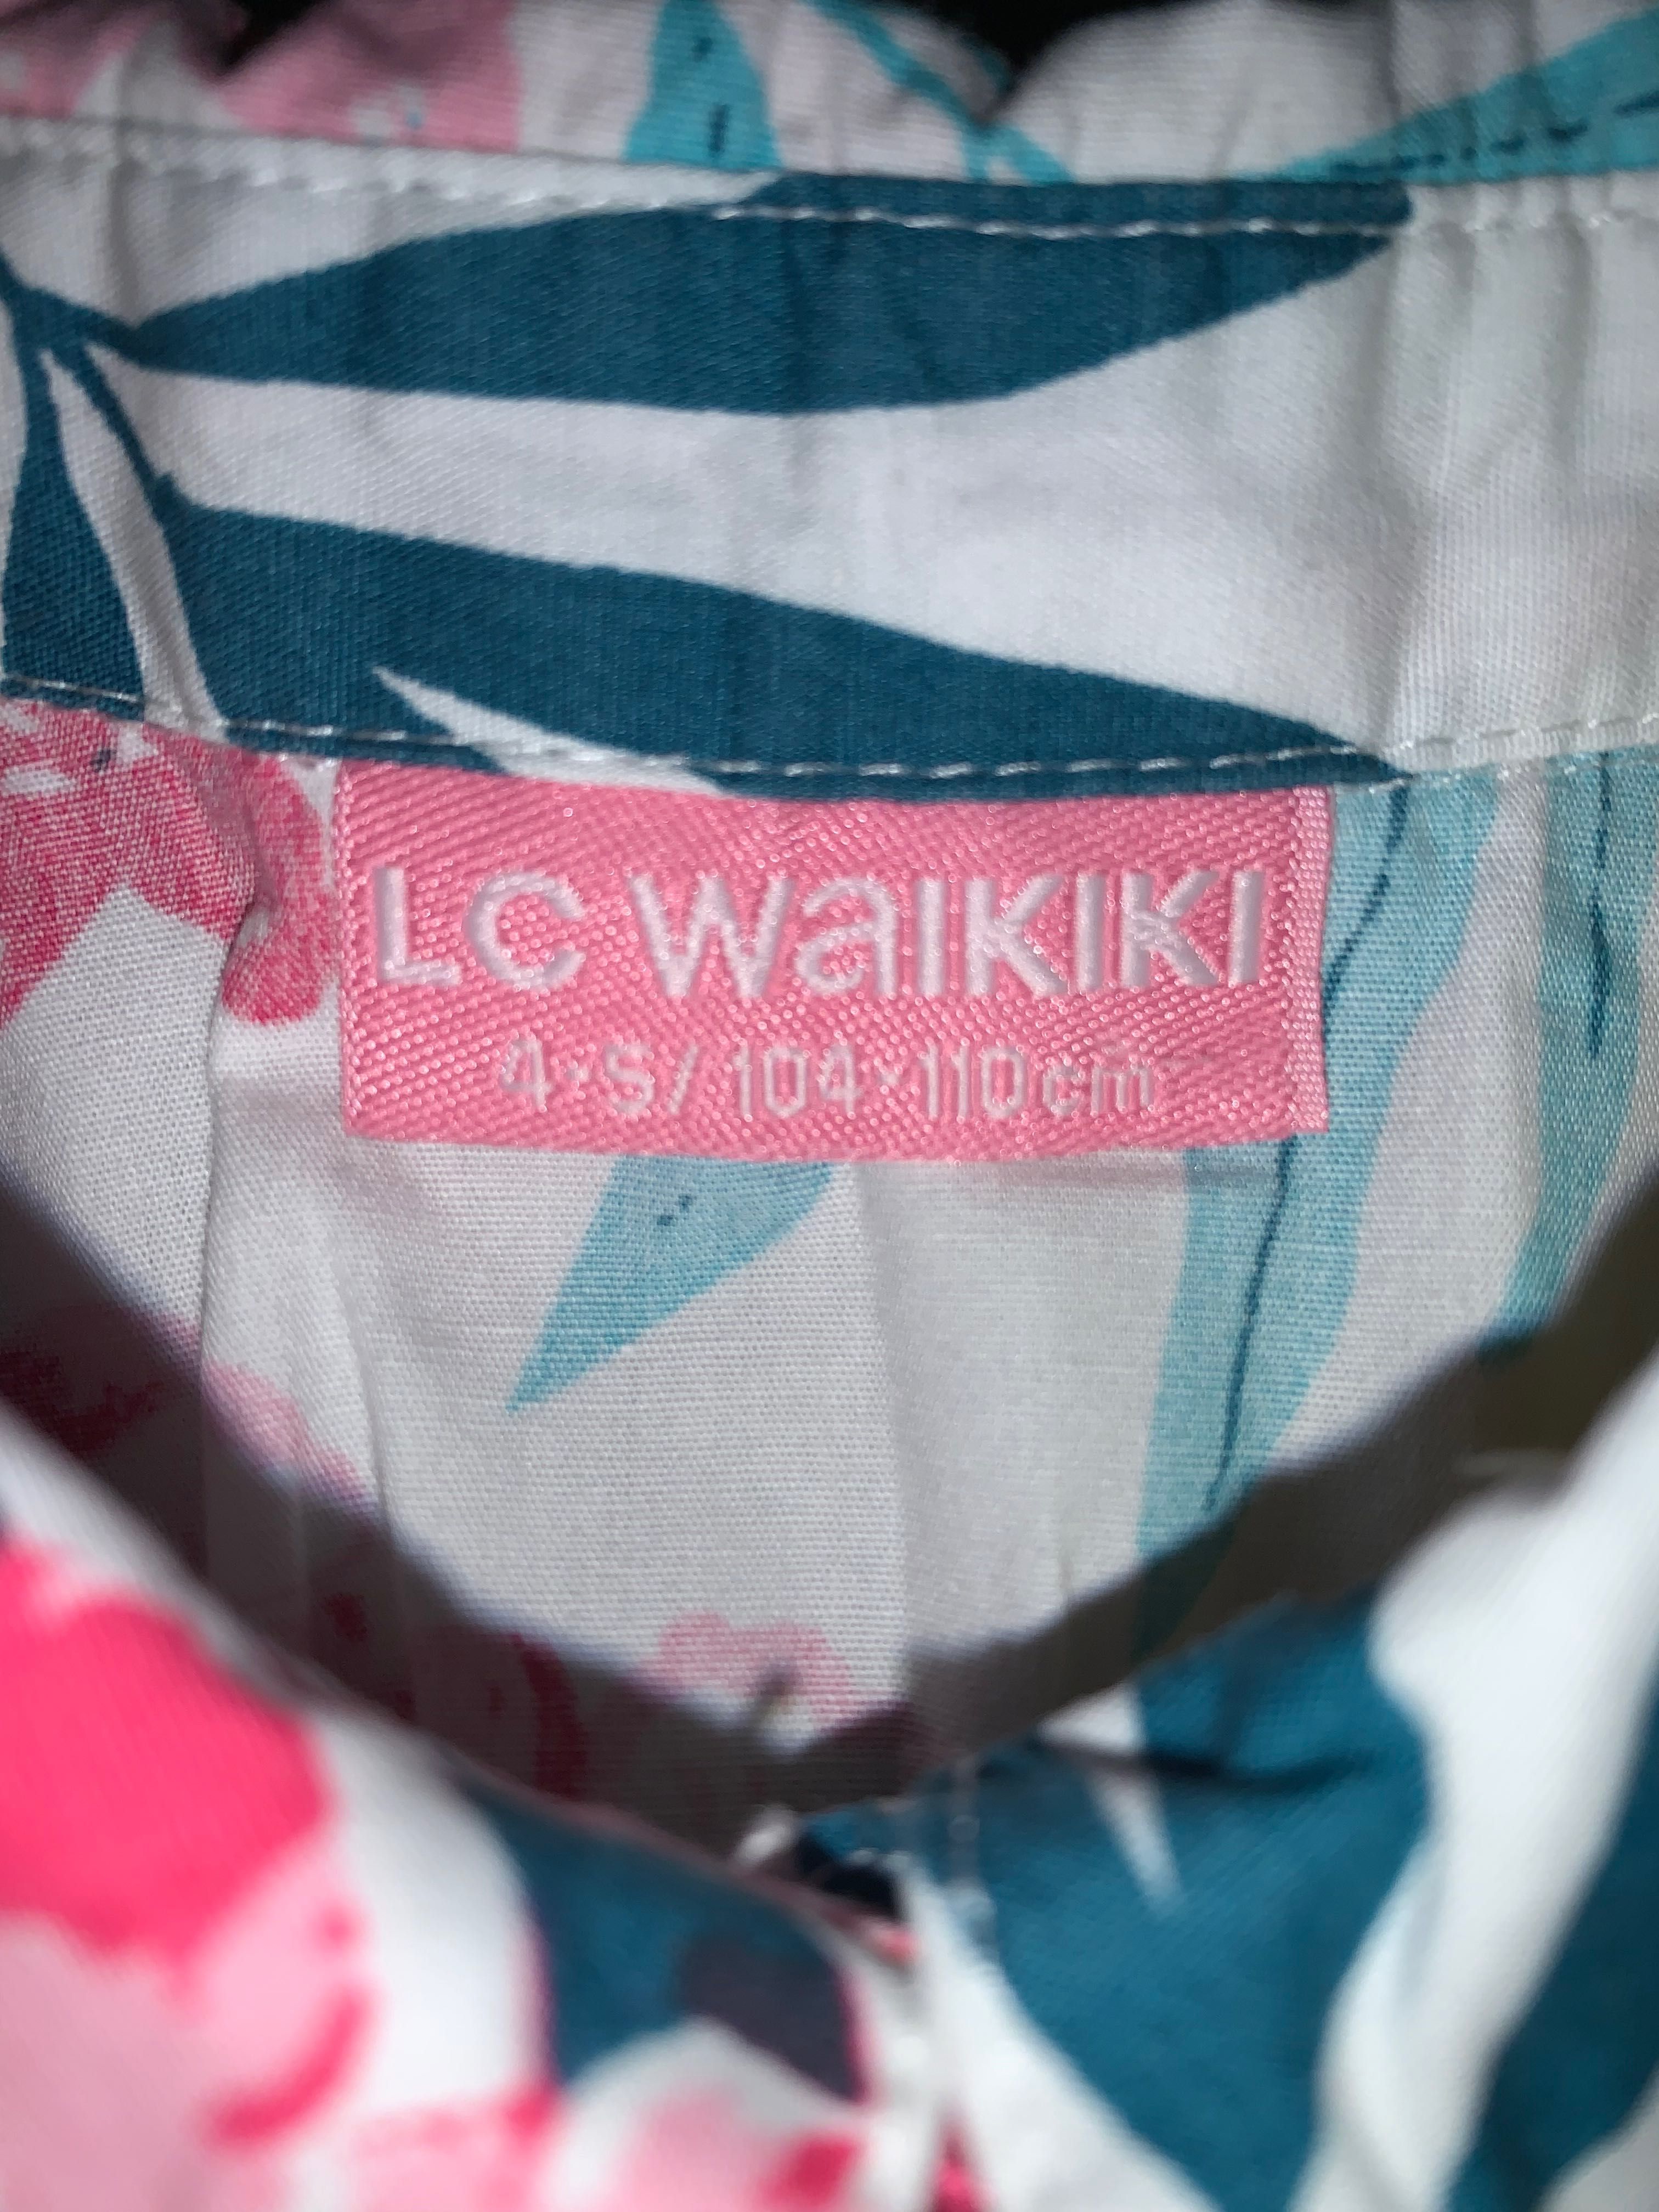 Платье на девочку LC Waikiki 4-5 лет 104-110 см